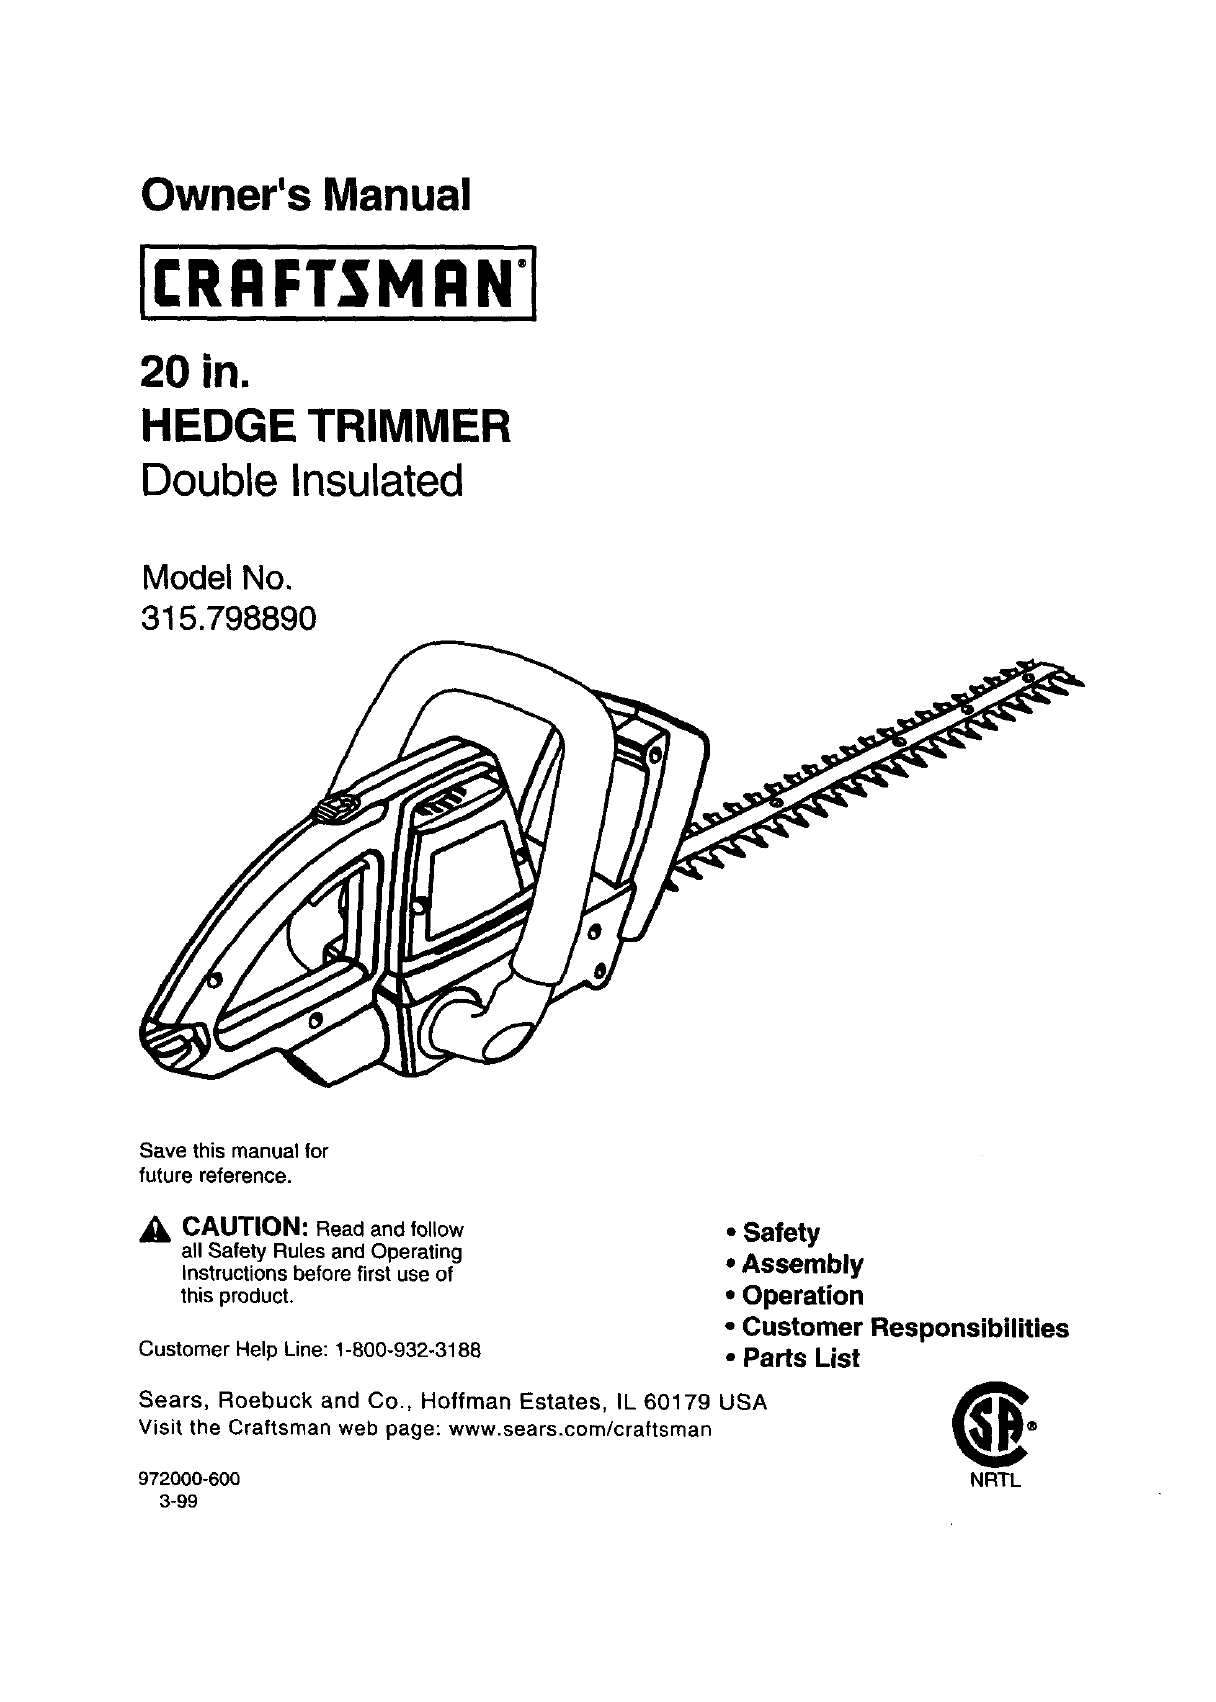 Craftsman 315 79889 Users Manual